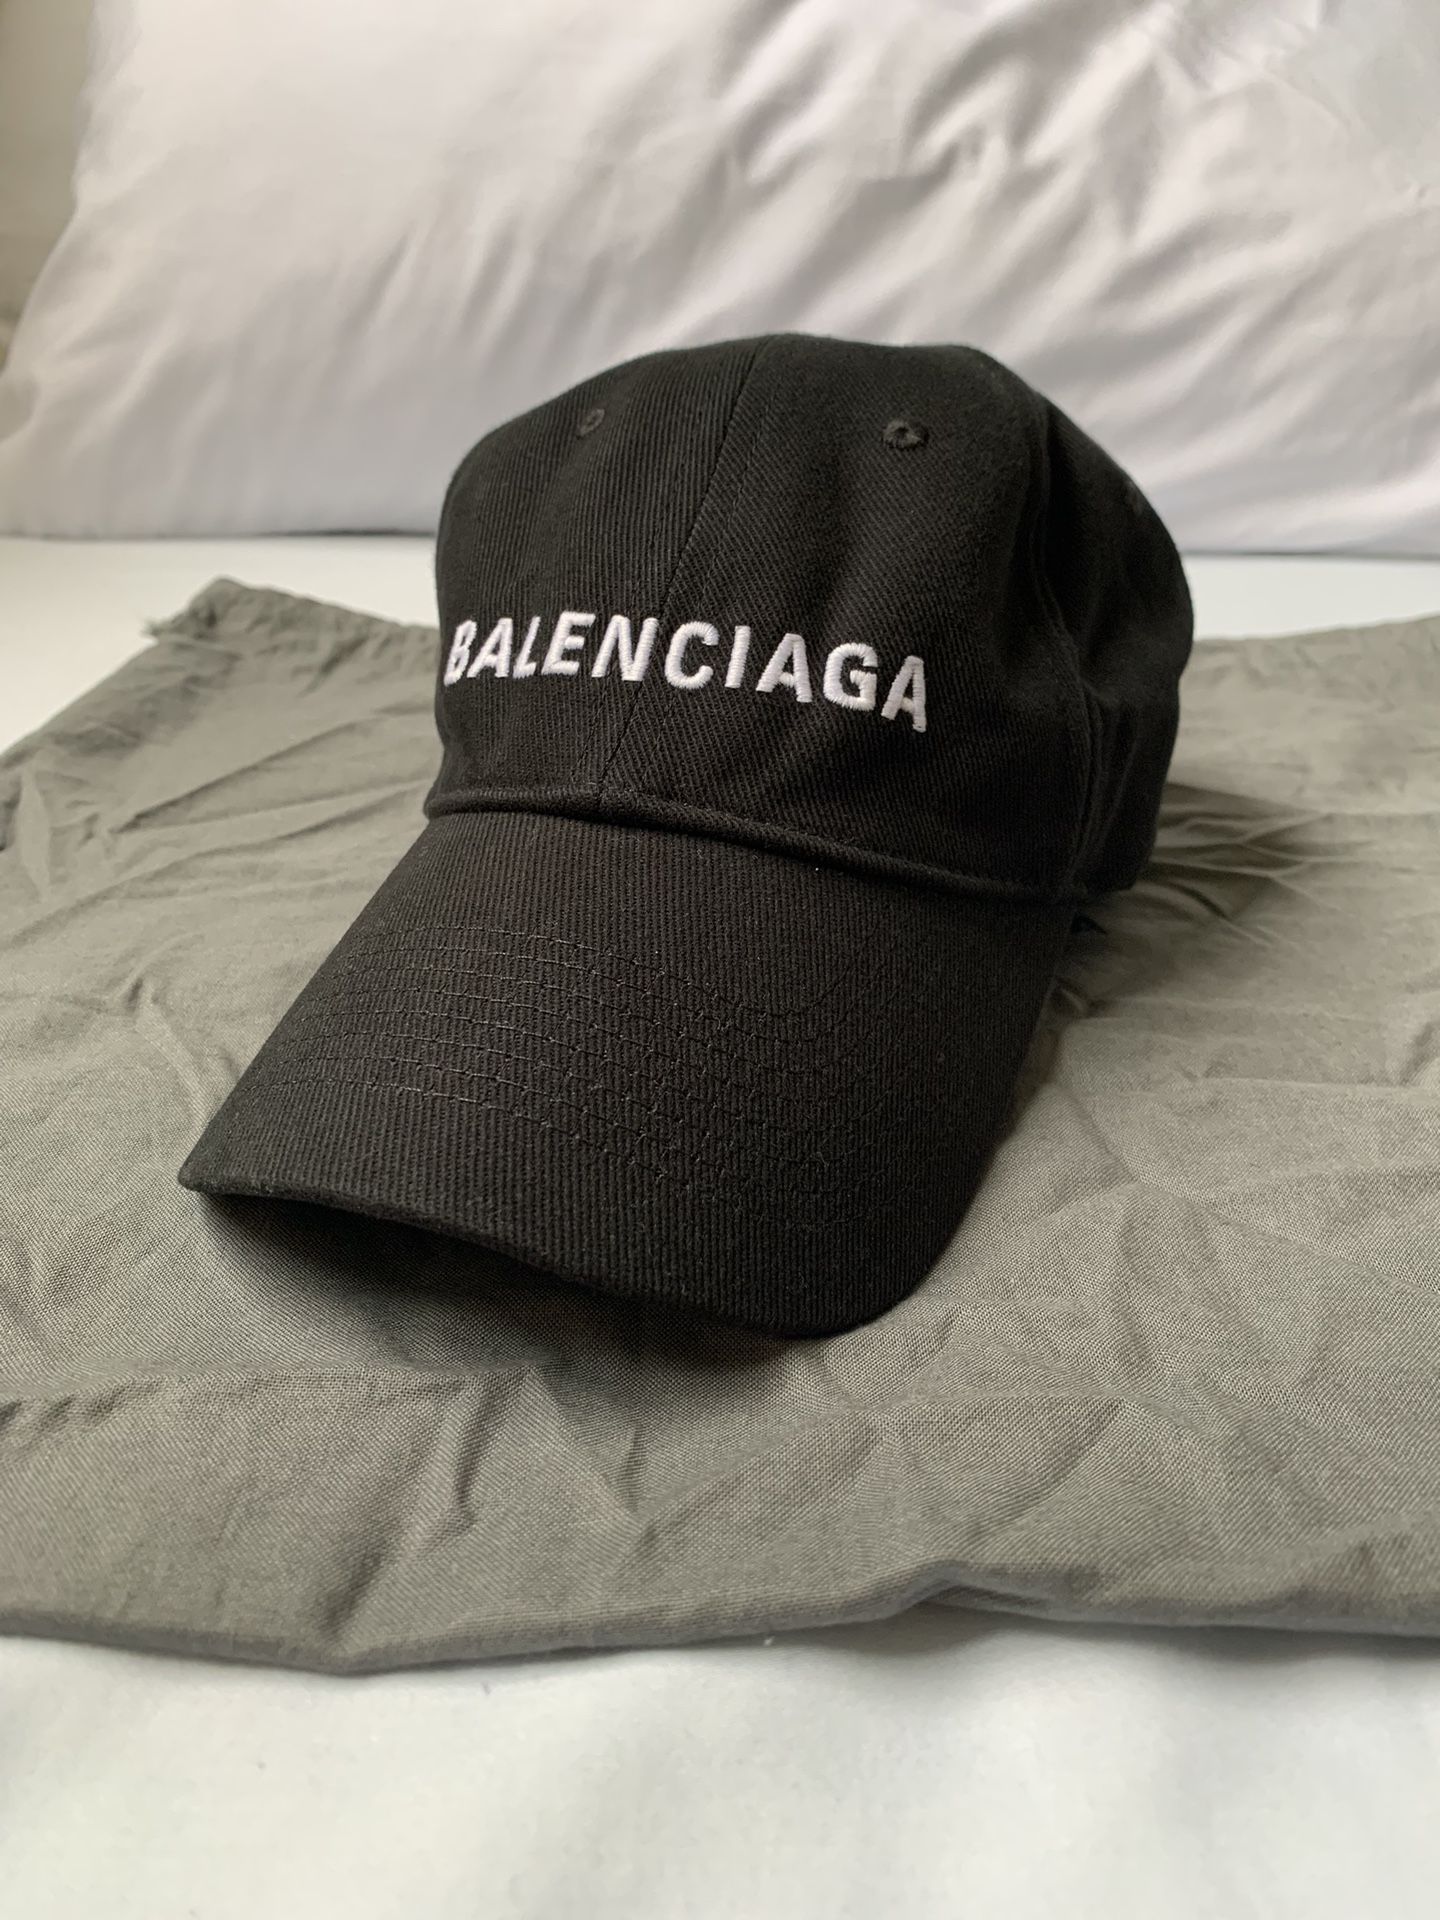 fest træthed græs Balenciaga Cap IN Black for Sale in Costa Mesa, CA - OfferUp